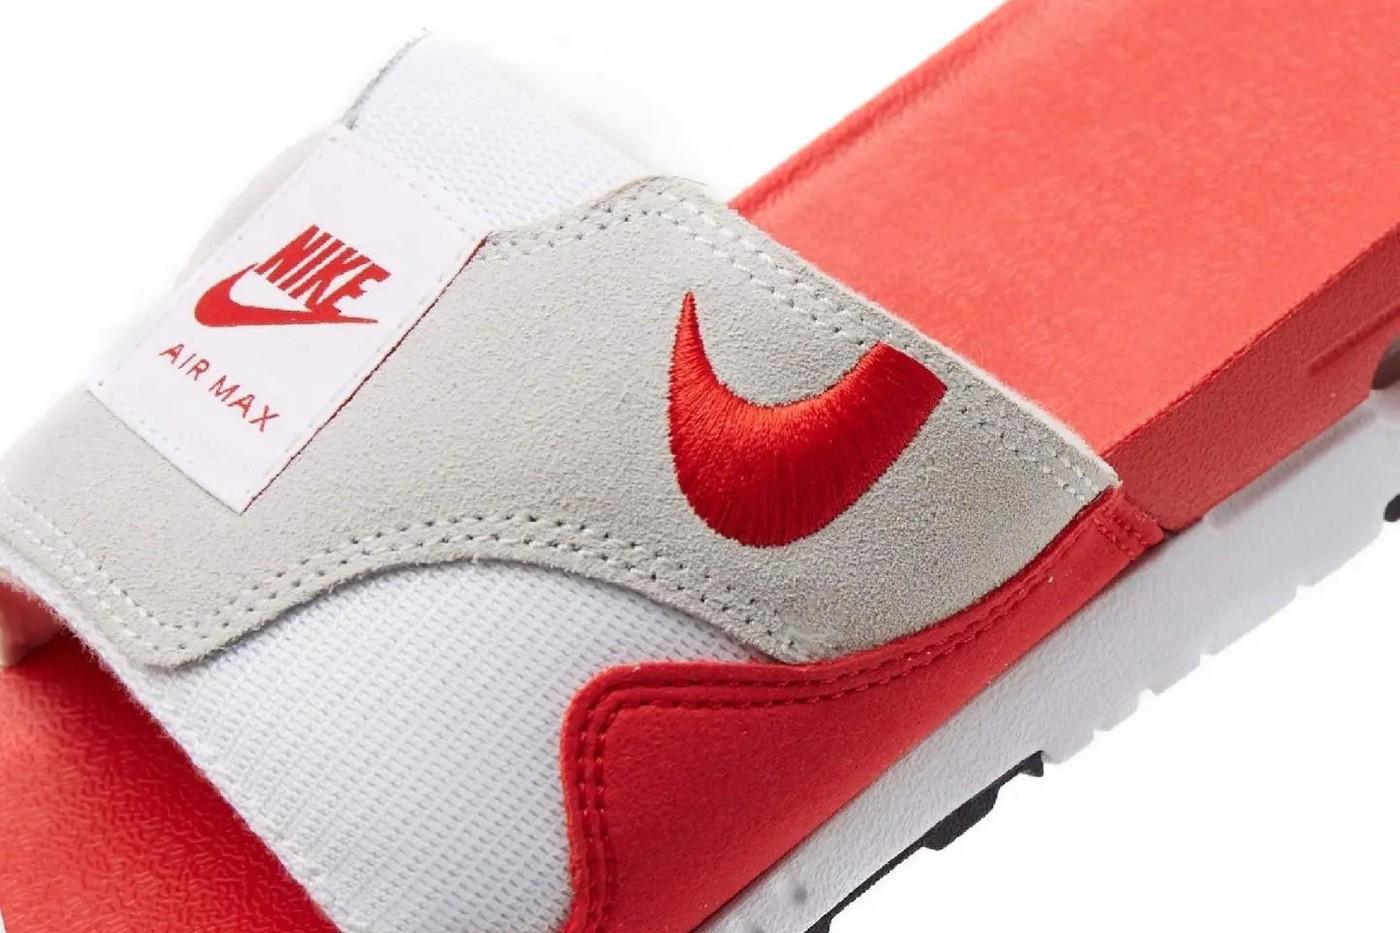 Nike Air Max 1 Slide 'Sport Red'